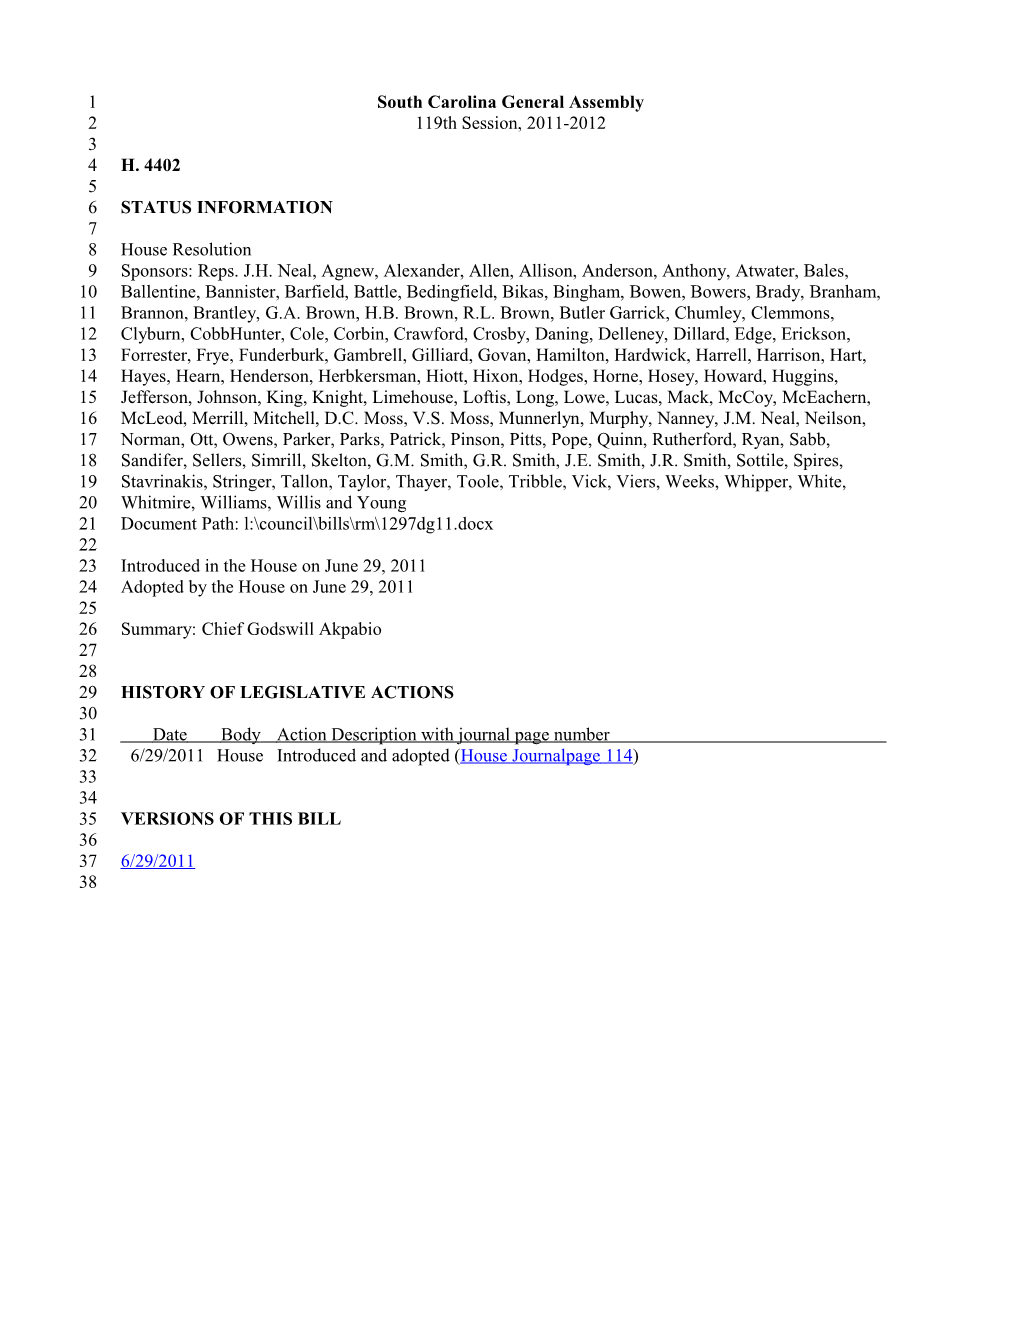 2011-2012 Bill 4402: Chief Godswill Akpabio - South Carolina Legislature Online